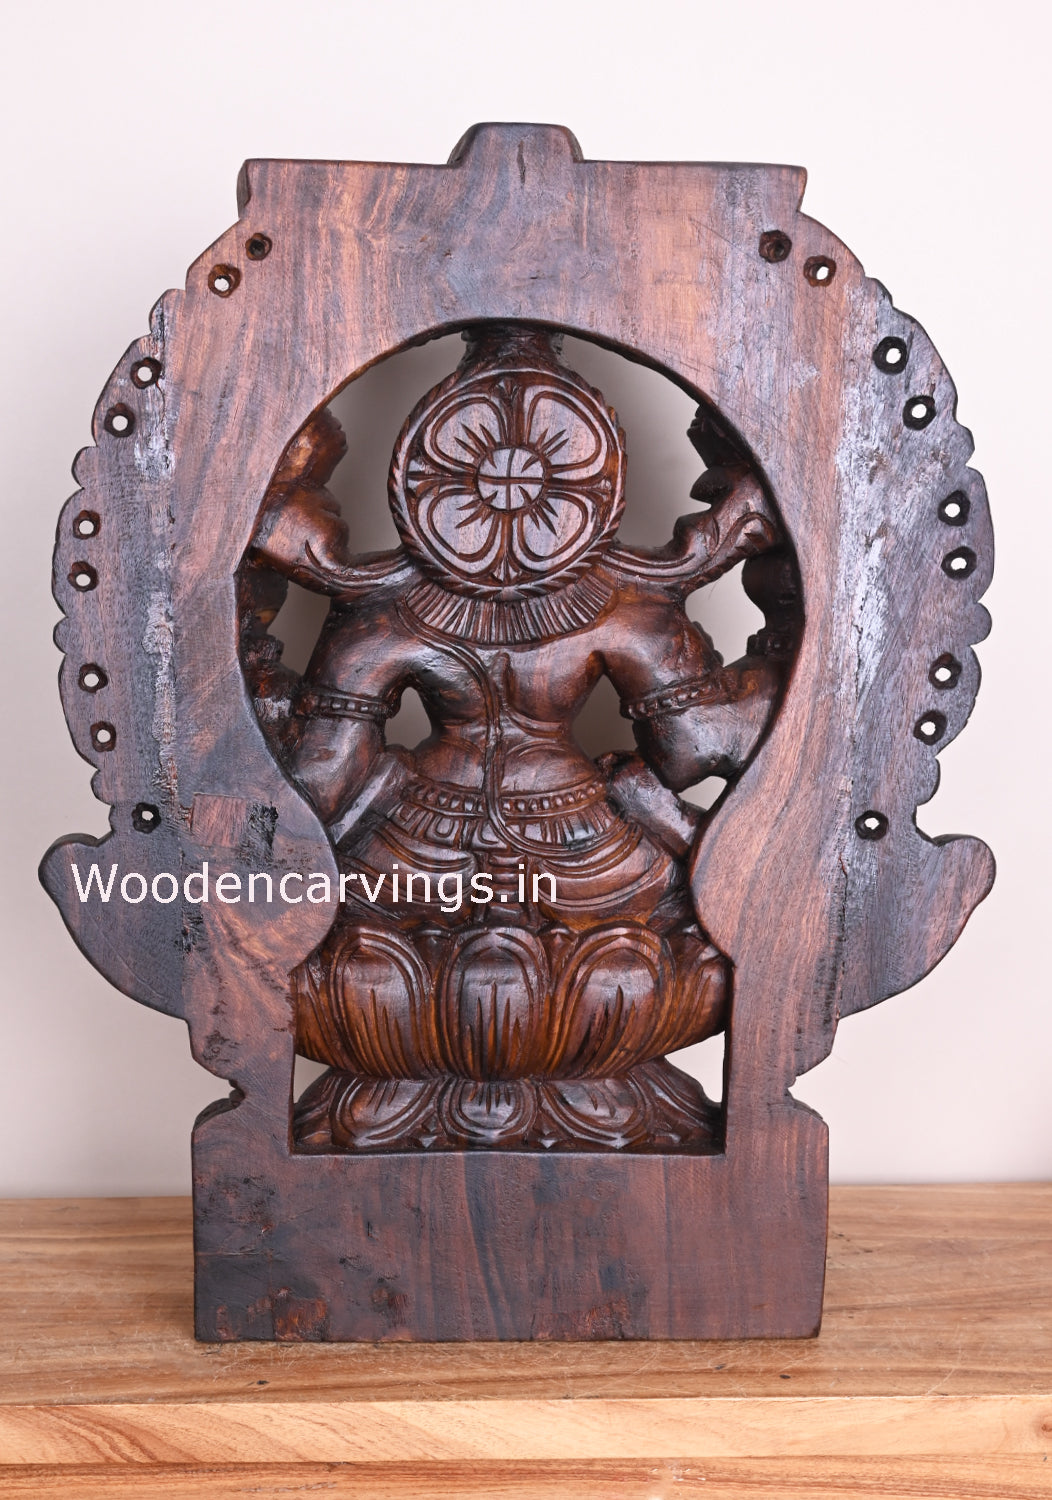 Mangala Maha Lakshmi Goddess Seated on Flower Lotus Arch Handmade Wooden Sculpture 24"